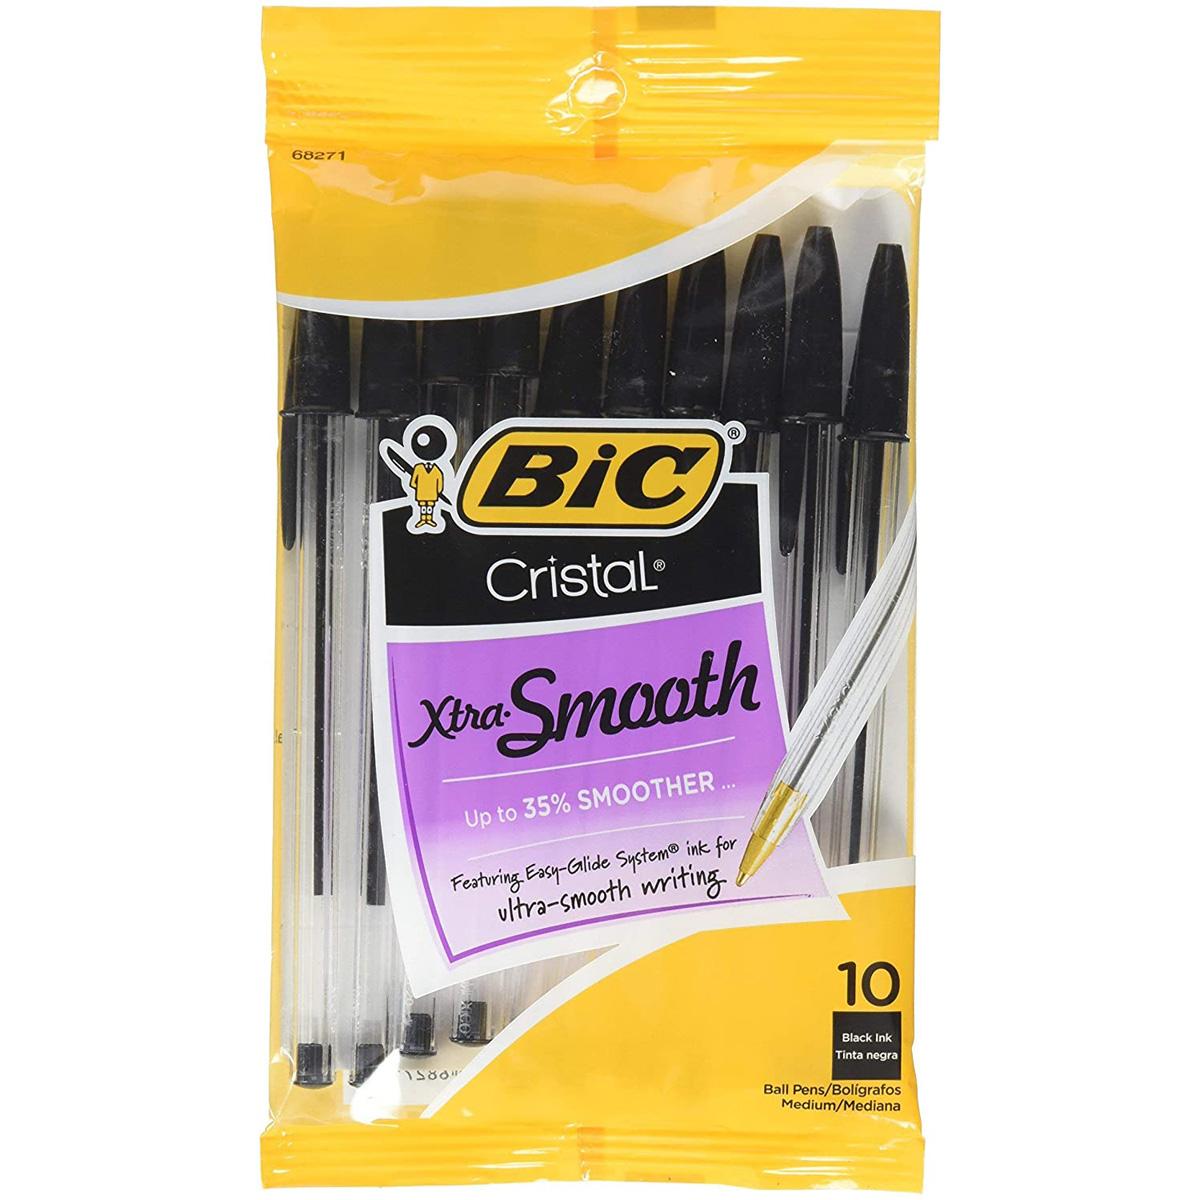 10 BIC Cristal Xtra Smooth Medium Point Ballpoint Pens for $0.89